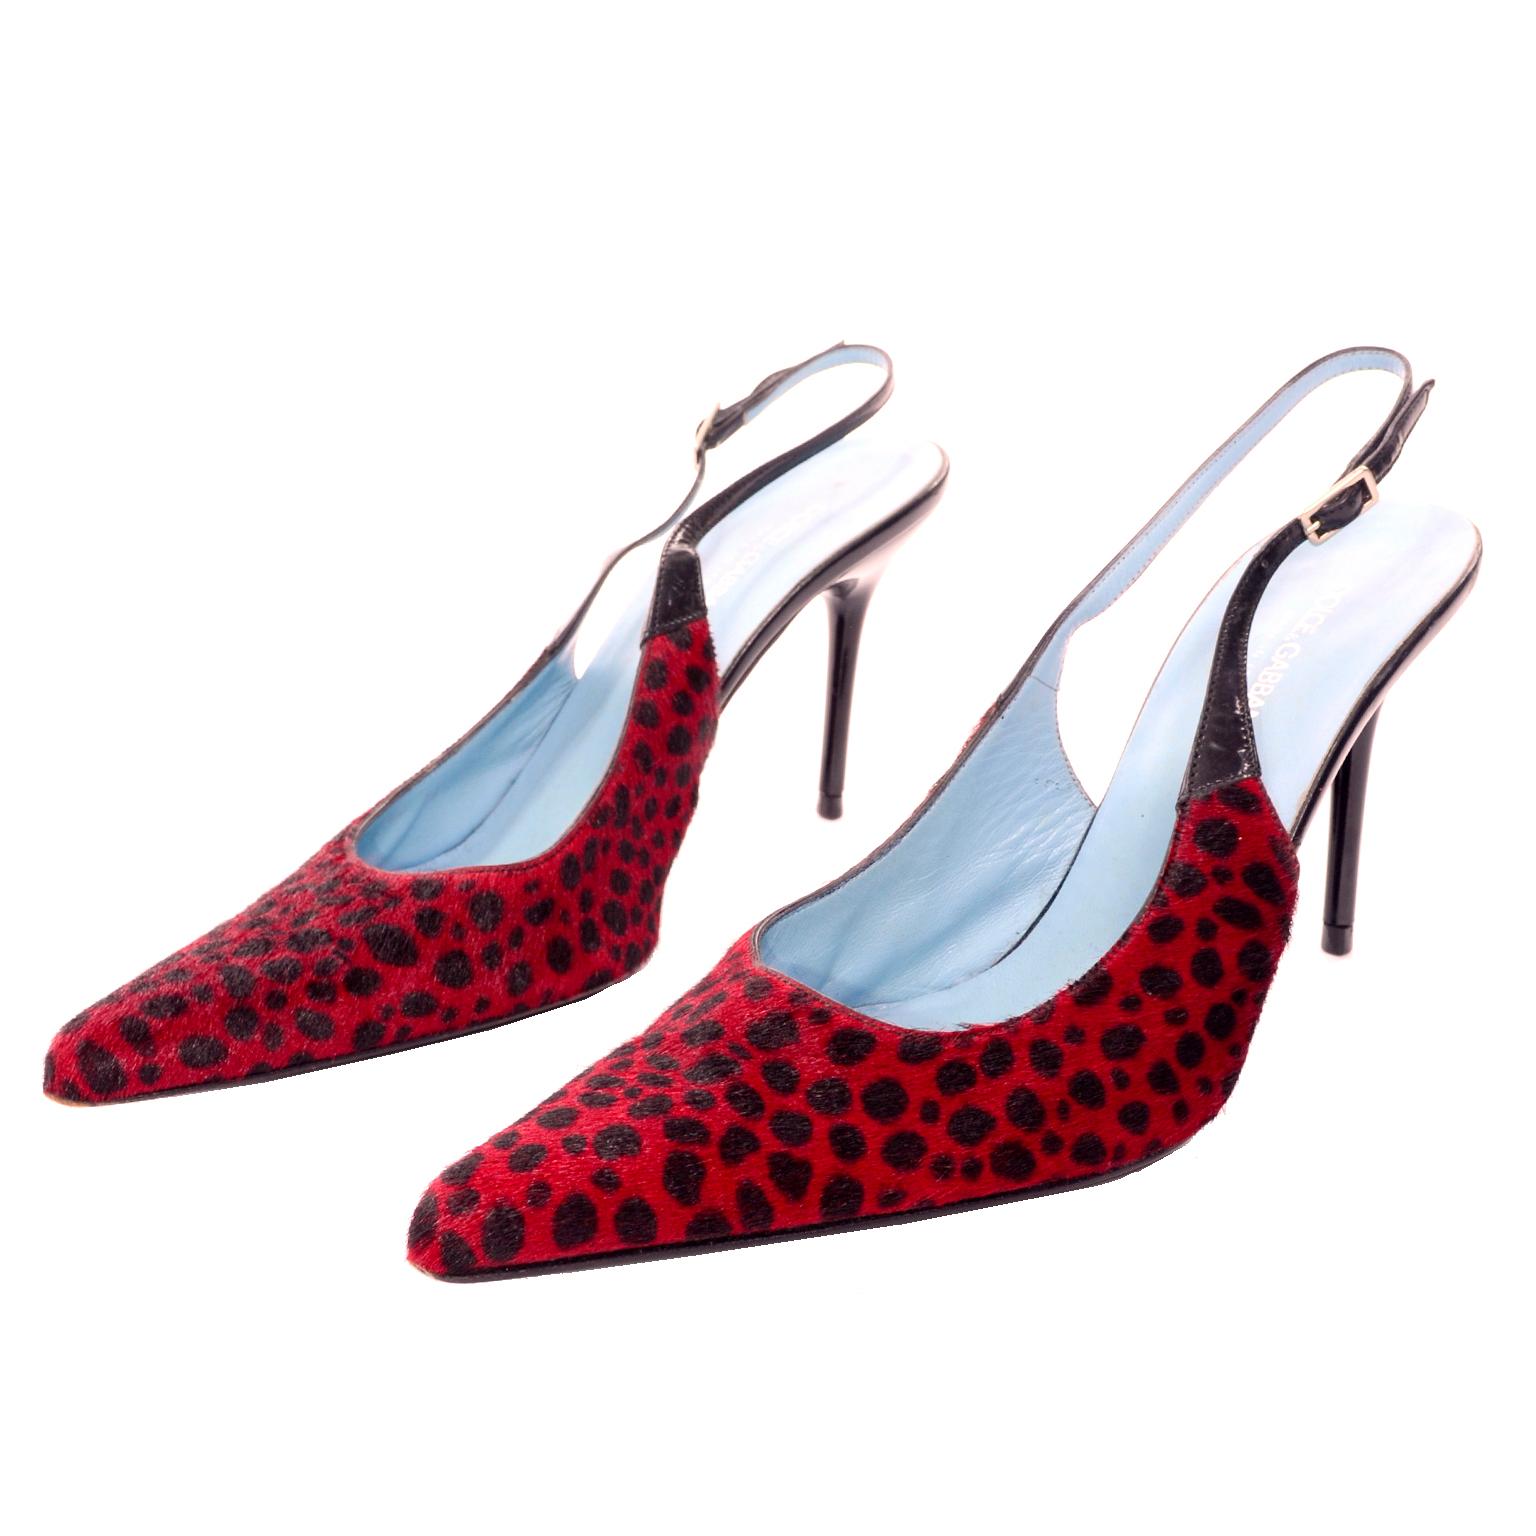 Dolce & Gabbana Animal Print Shoes in Red & Black Fur Slingback Heels